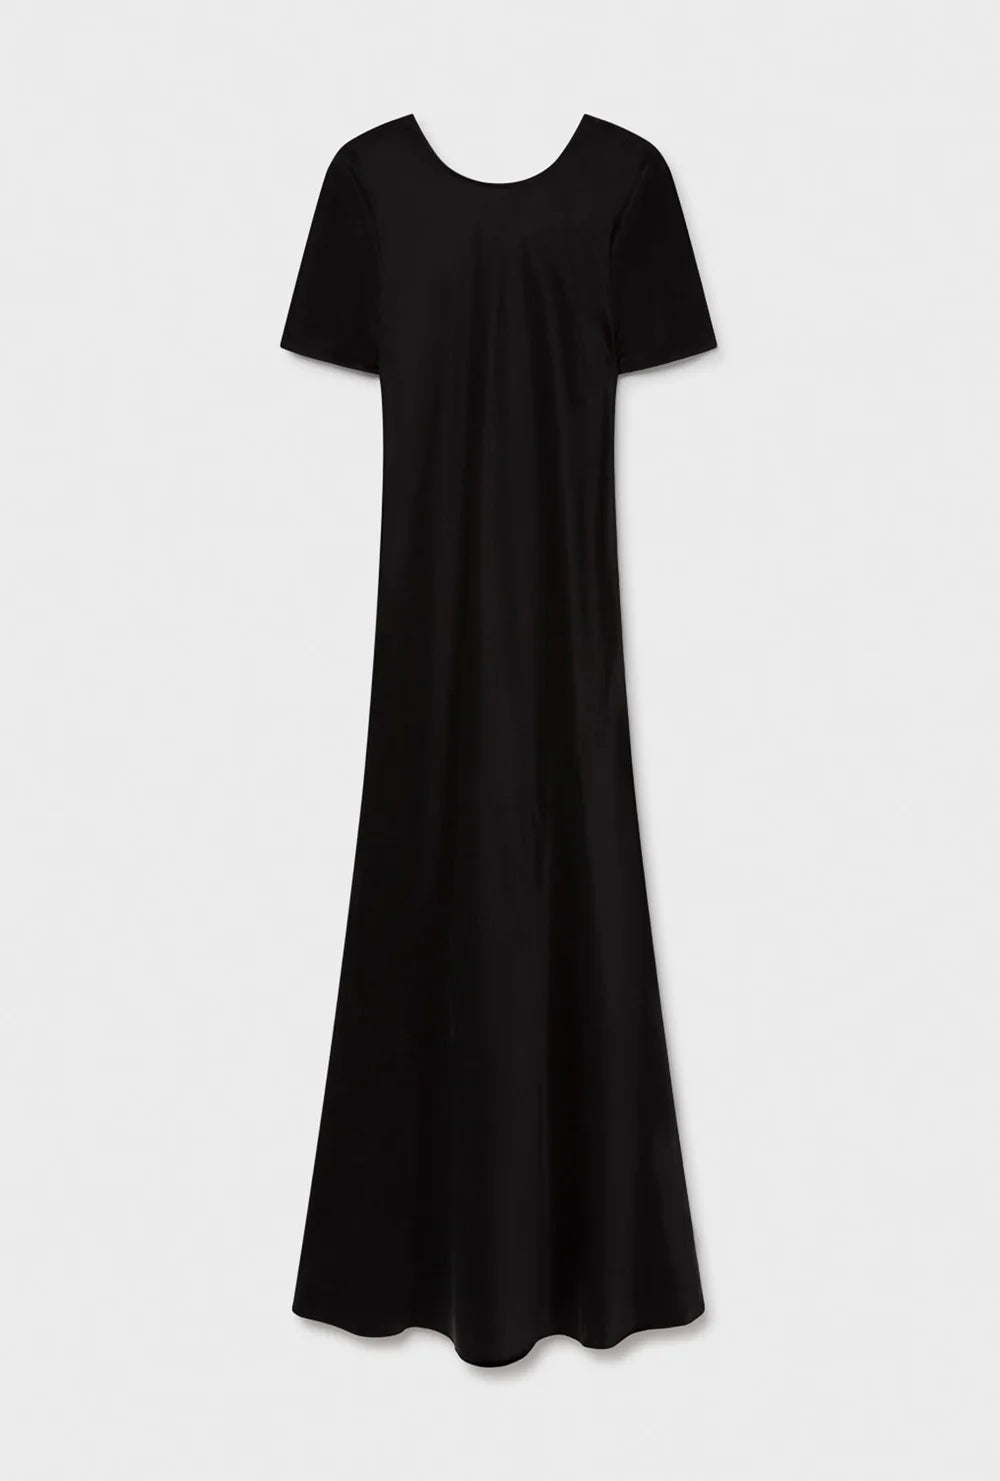 Silk Laundry Short Sleeve Bias Dress Black